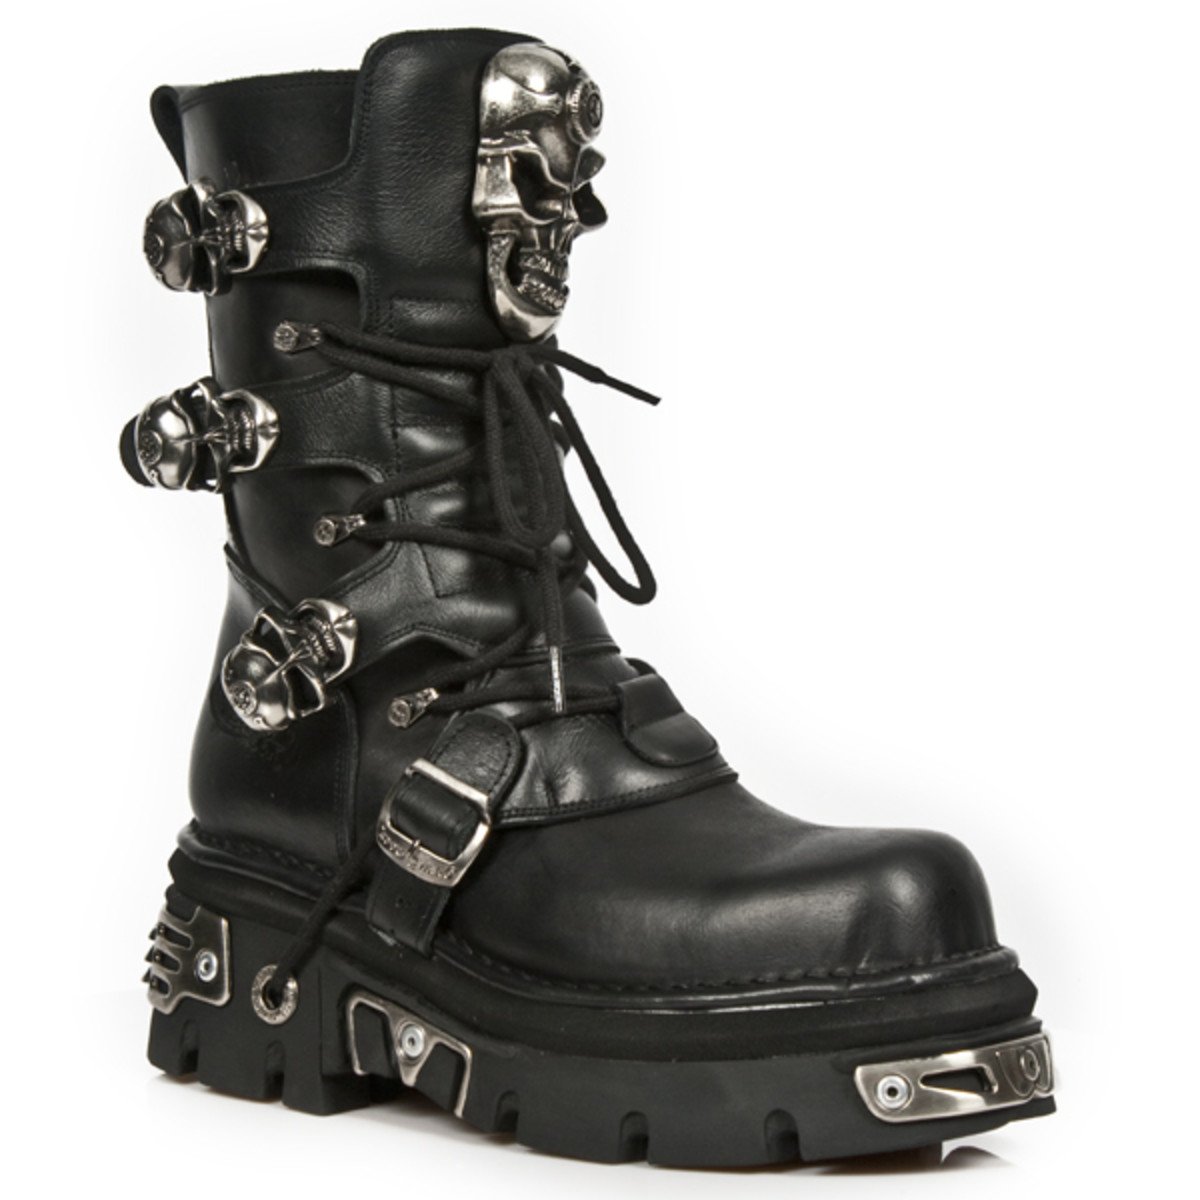 boty kožené dámské - REACTOR NEGRO E14 ORIF Y - NEW ROCK - M.375-S1 43